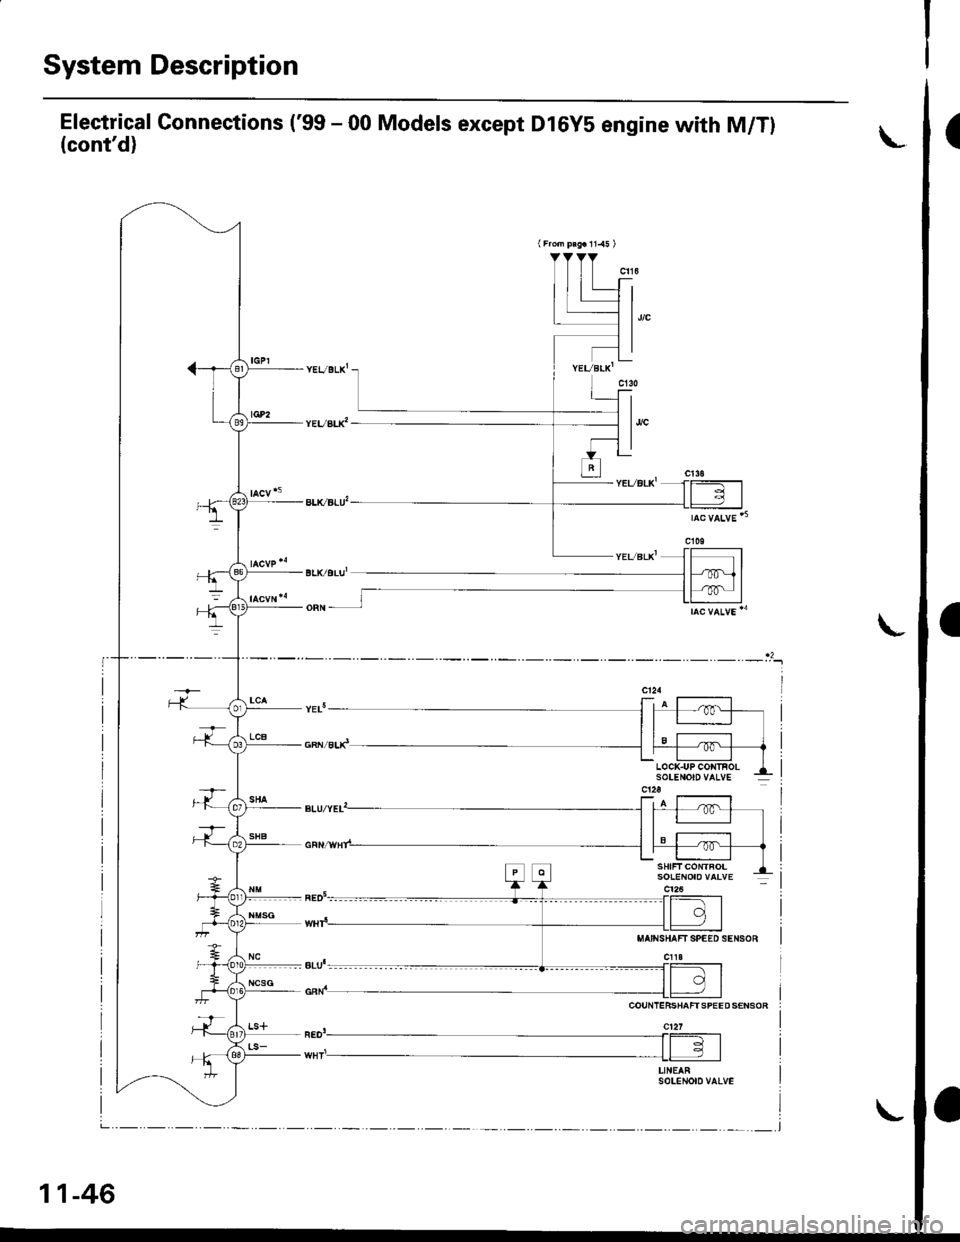 HONDA CIVIC 1998 6.G Owners Manual System Description
Electrical Connections (99 - 00 Models except Dl6Y5 engine with M/Tl
(contd)
cl09
racvP*{- BLK/eLu-lqt
pl
MAINSHAFT SPEEO SENSOR
clla
COUNIERSHAFTSPEED SENSOR
c121
tt I I
UNEARSO